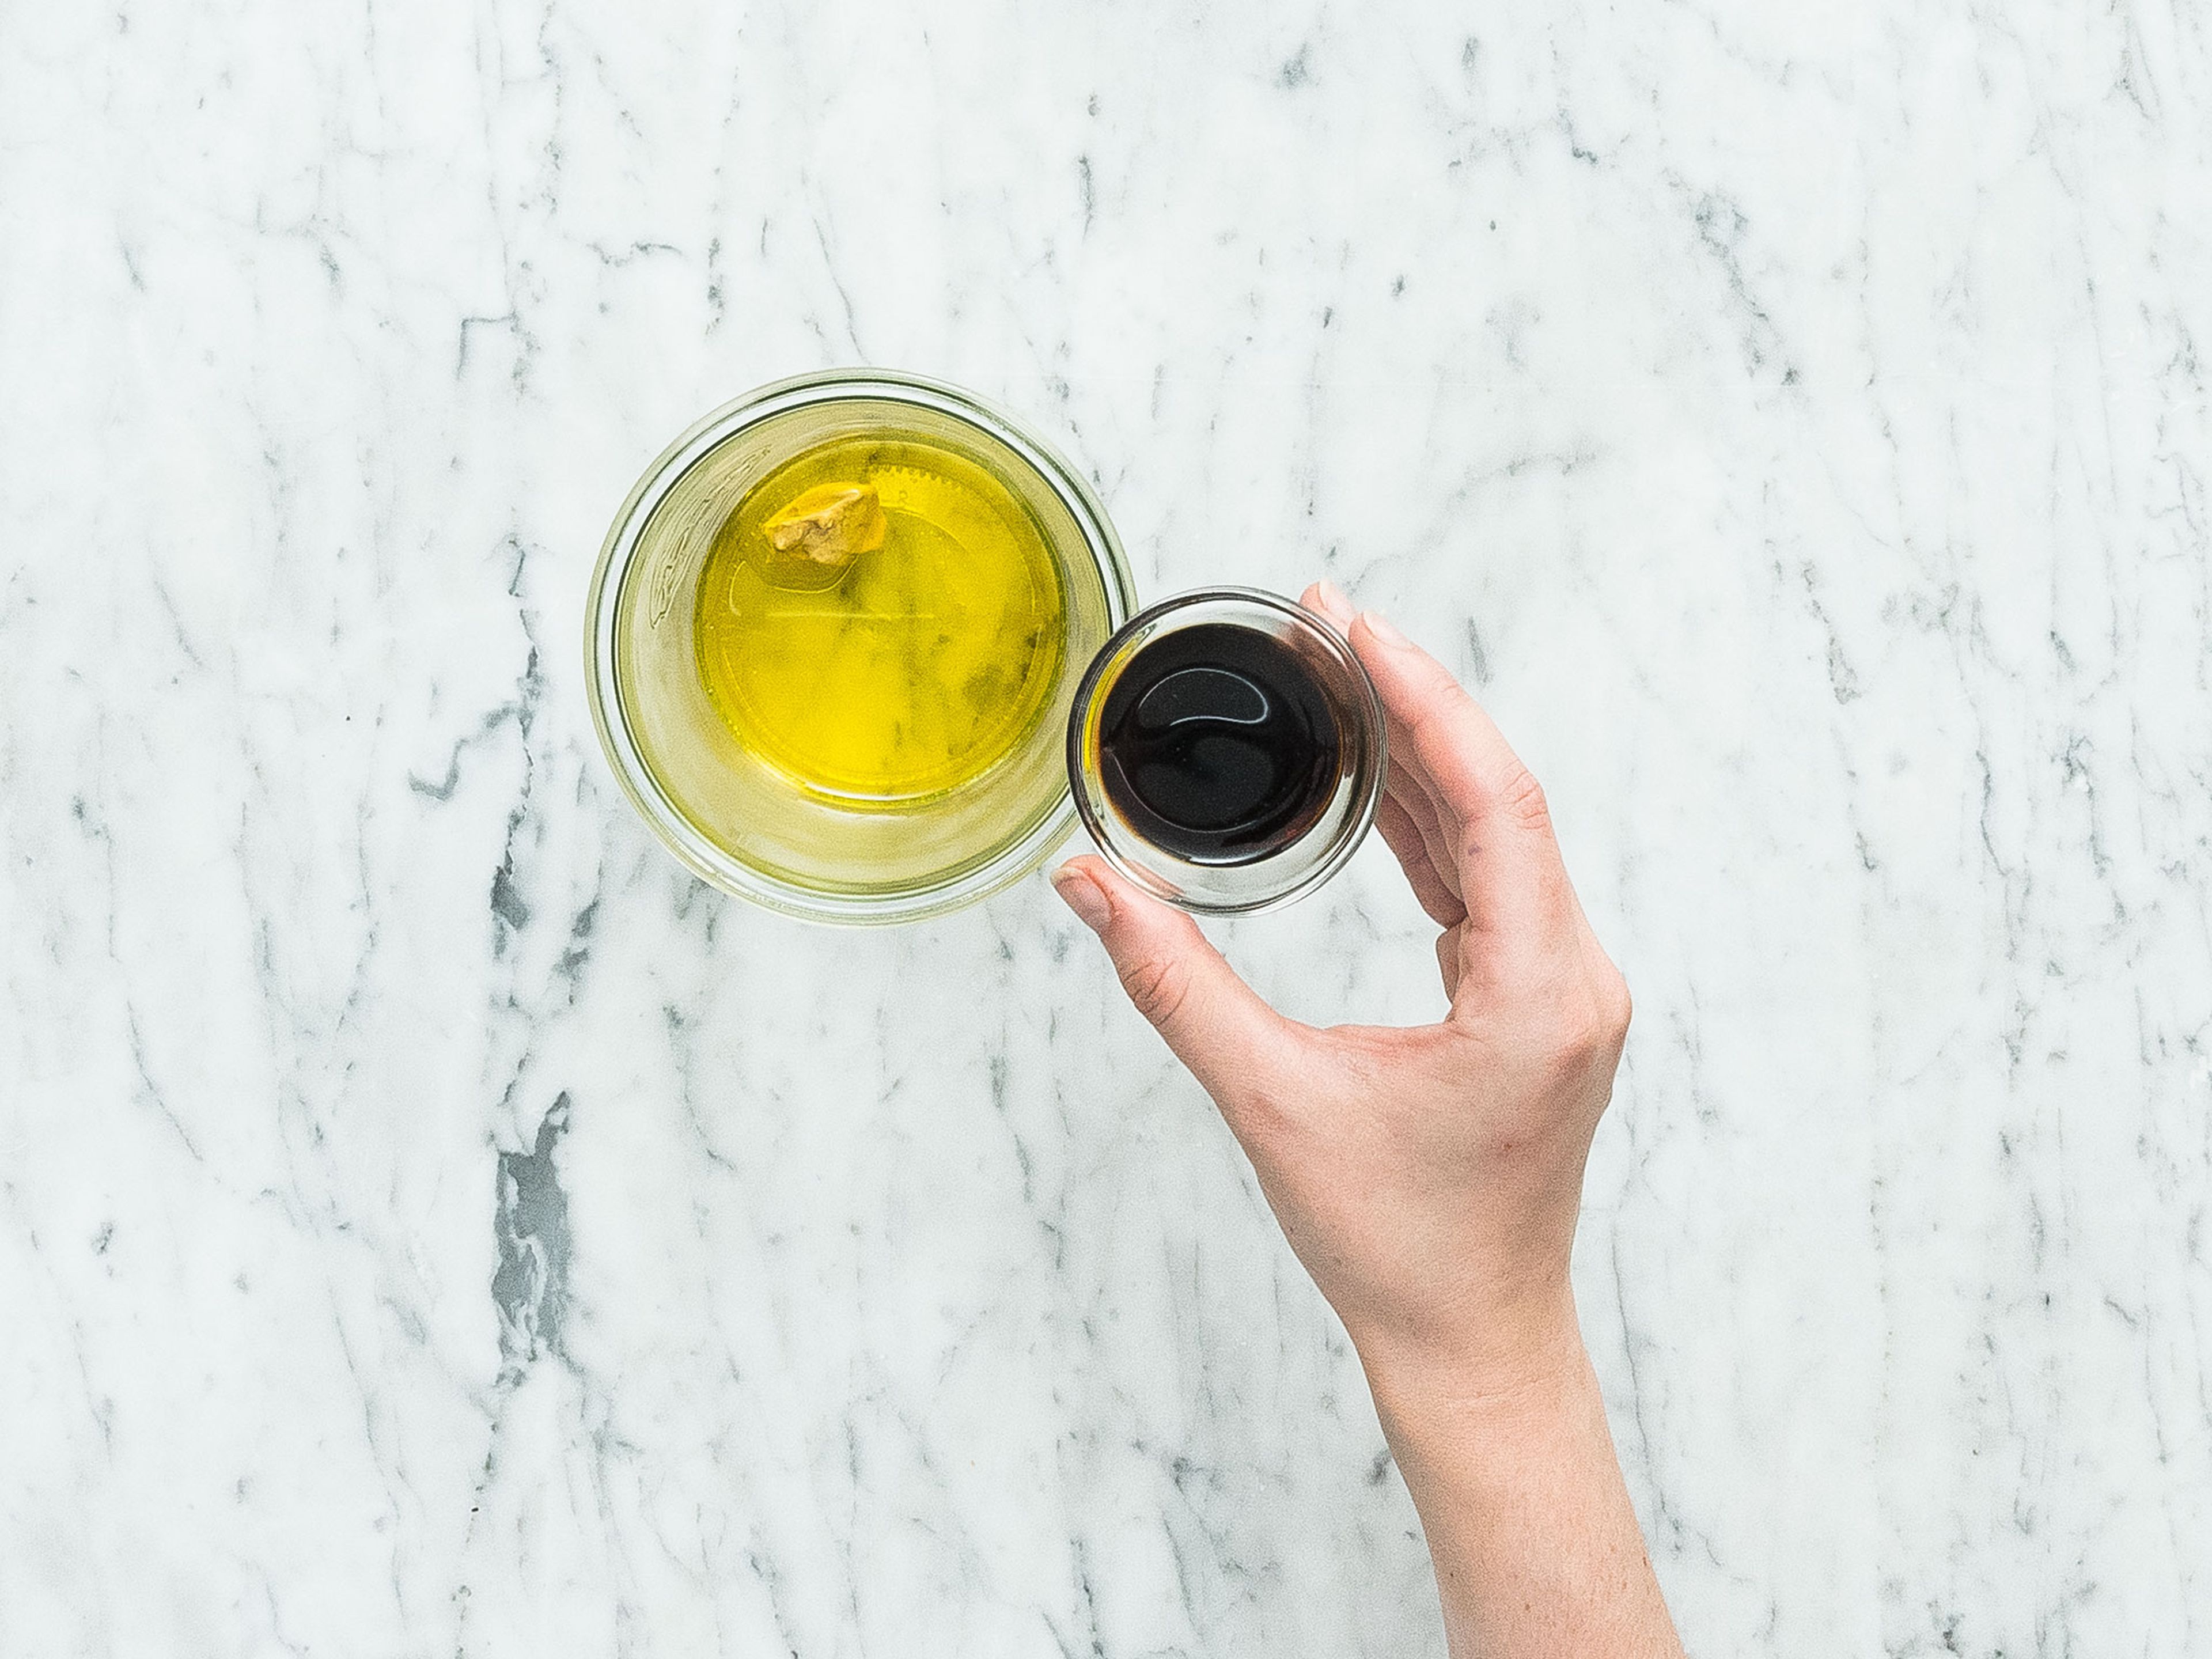 For the vinaigrette, mix the white wine vinegar, balsamic vinegar, mustard, and olive oil in an airtight jar. Season to taste with salt and pepper.